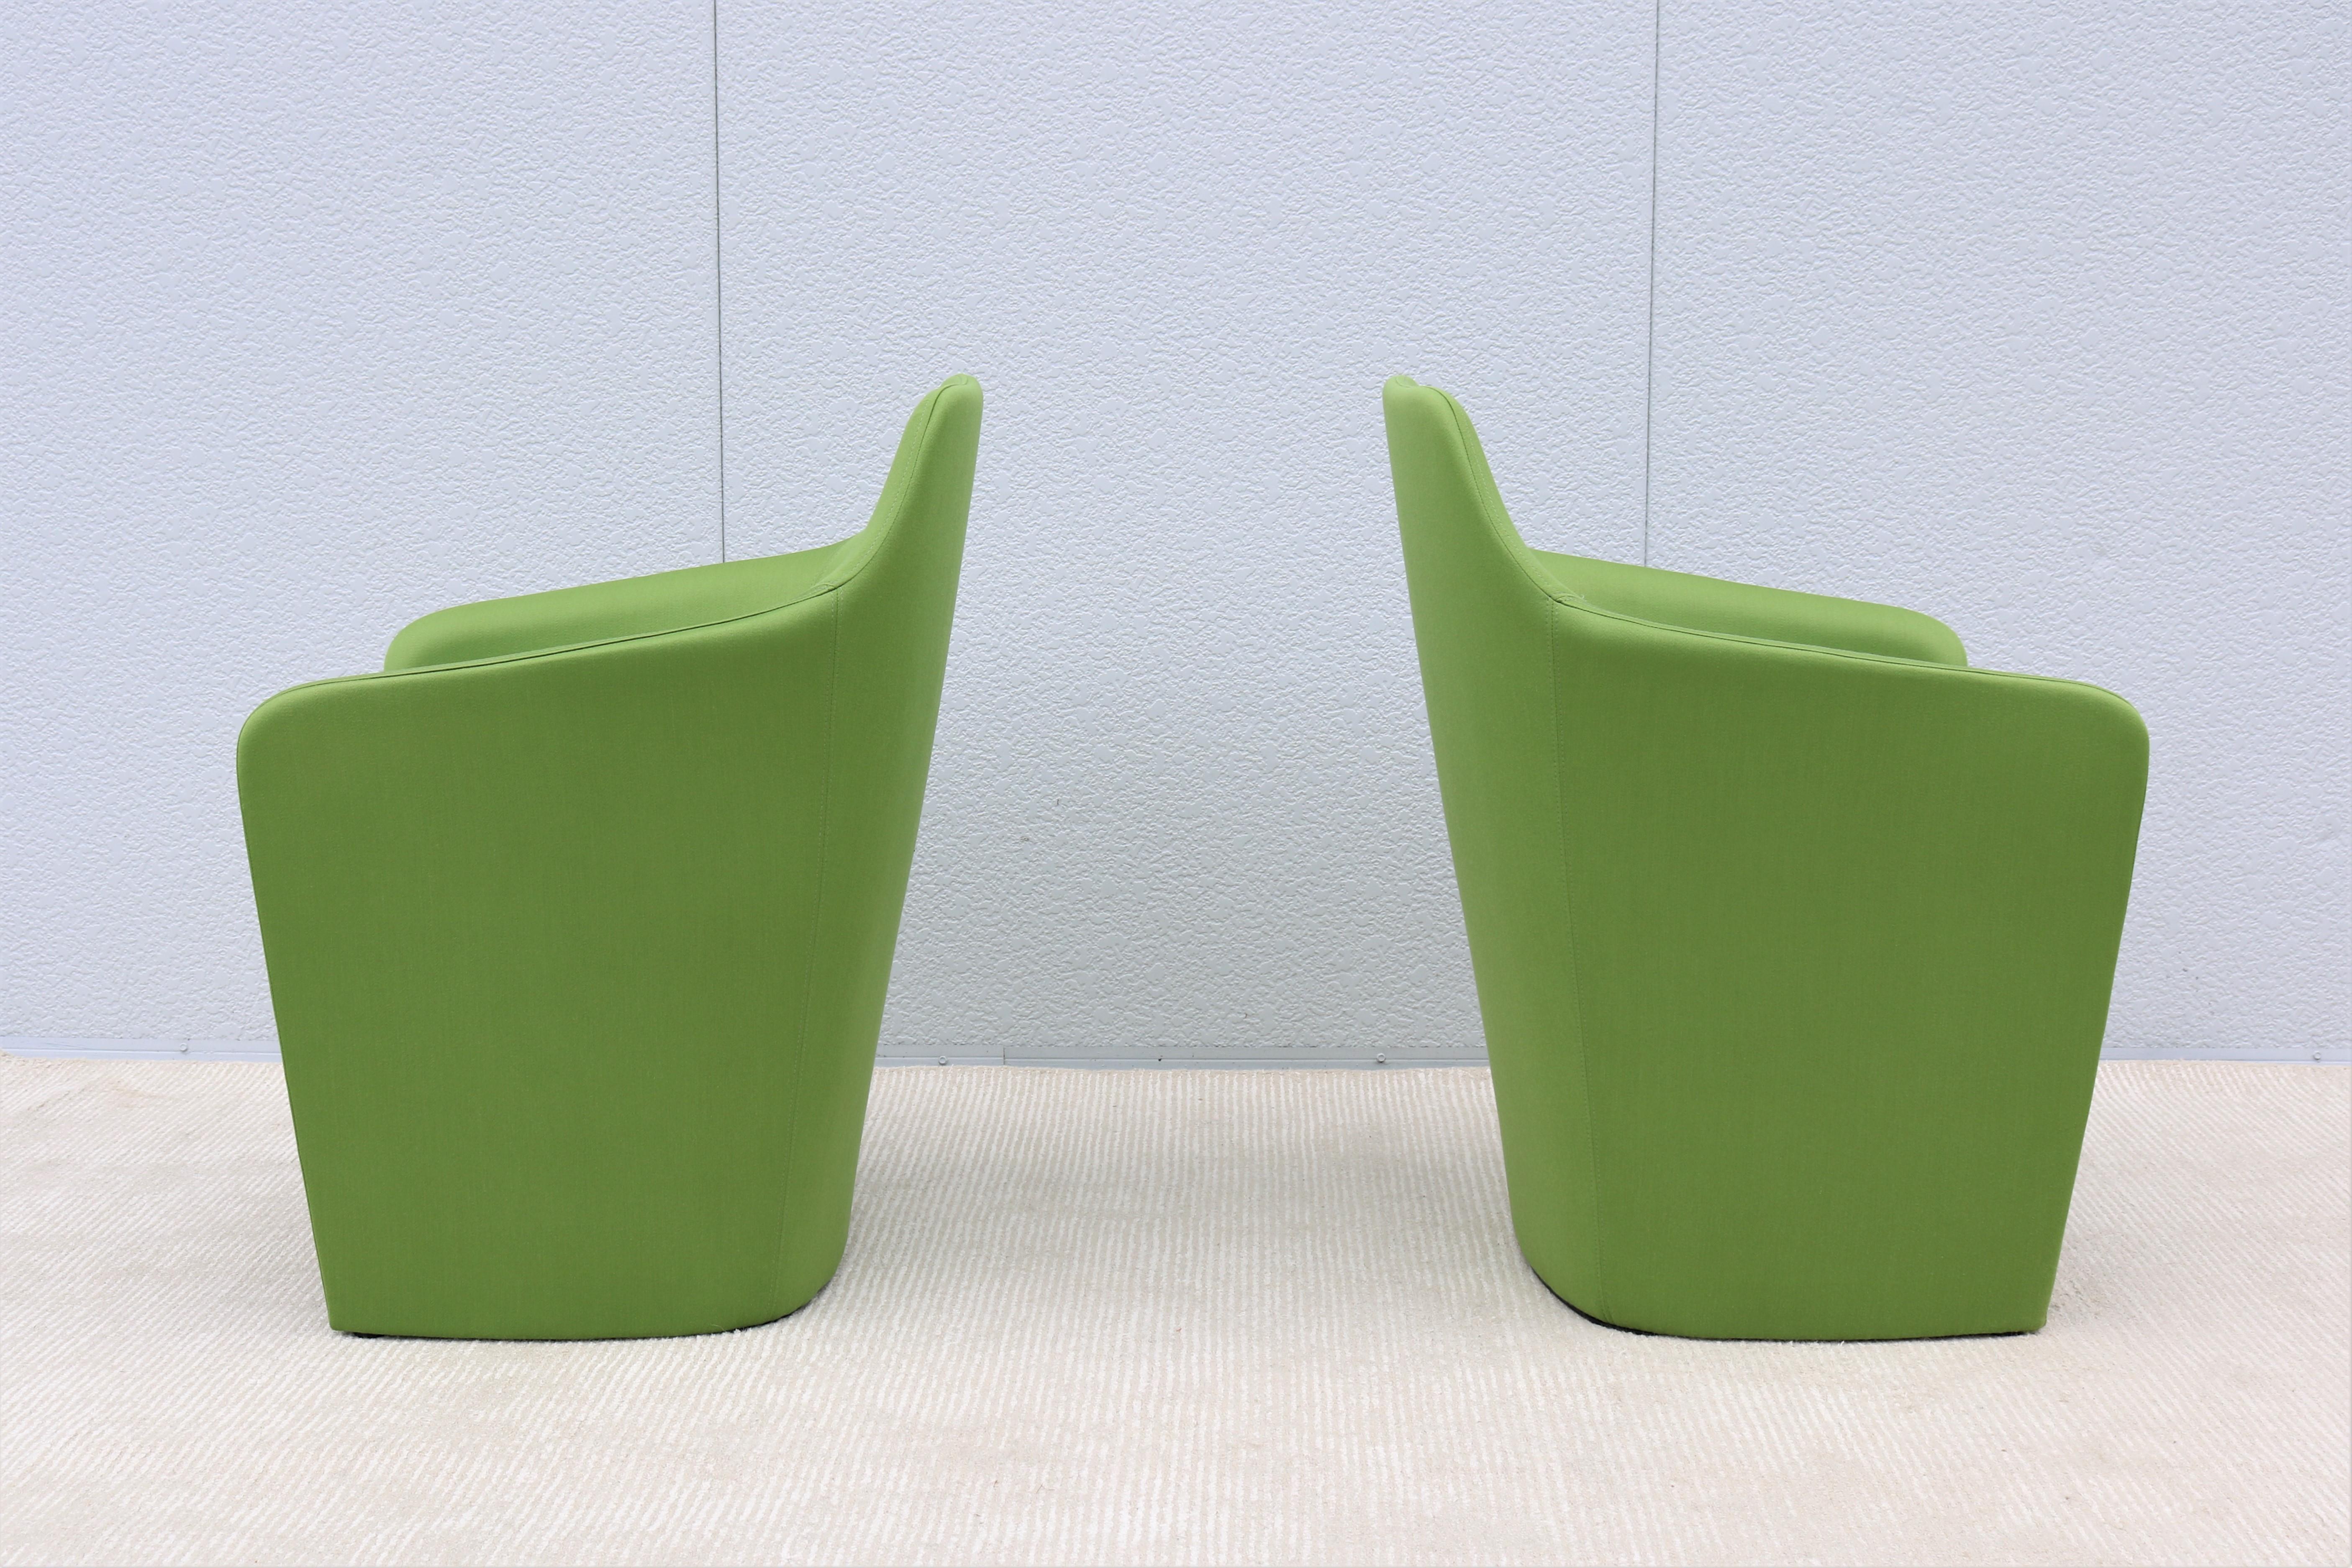 American Contemporary Modern Simon Pengelly for Allermuir Venus Green Tub Chairs, a Pair For Sale